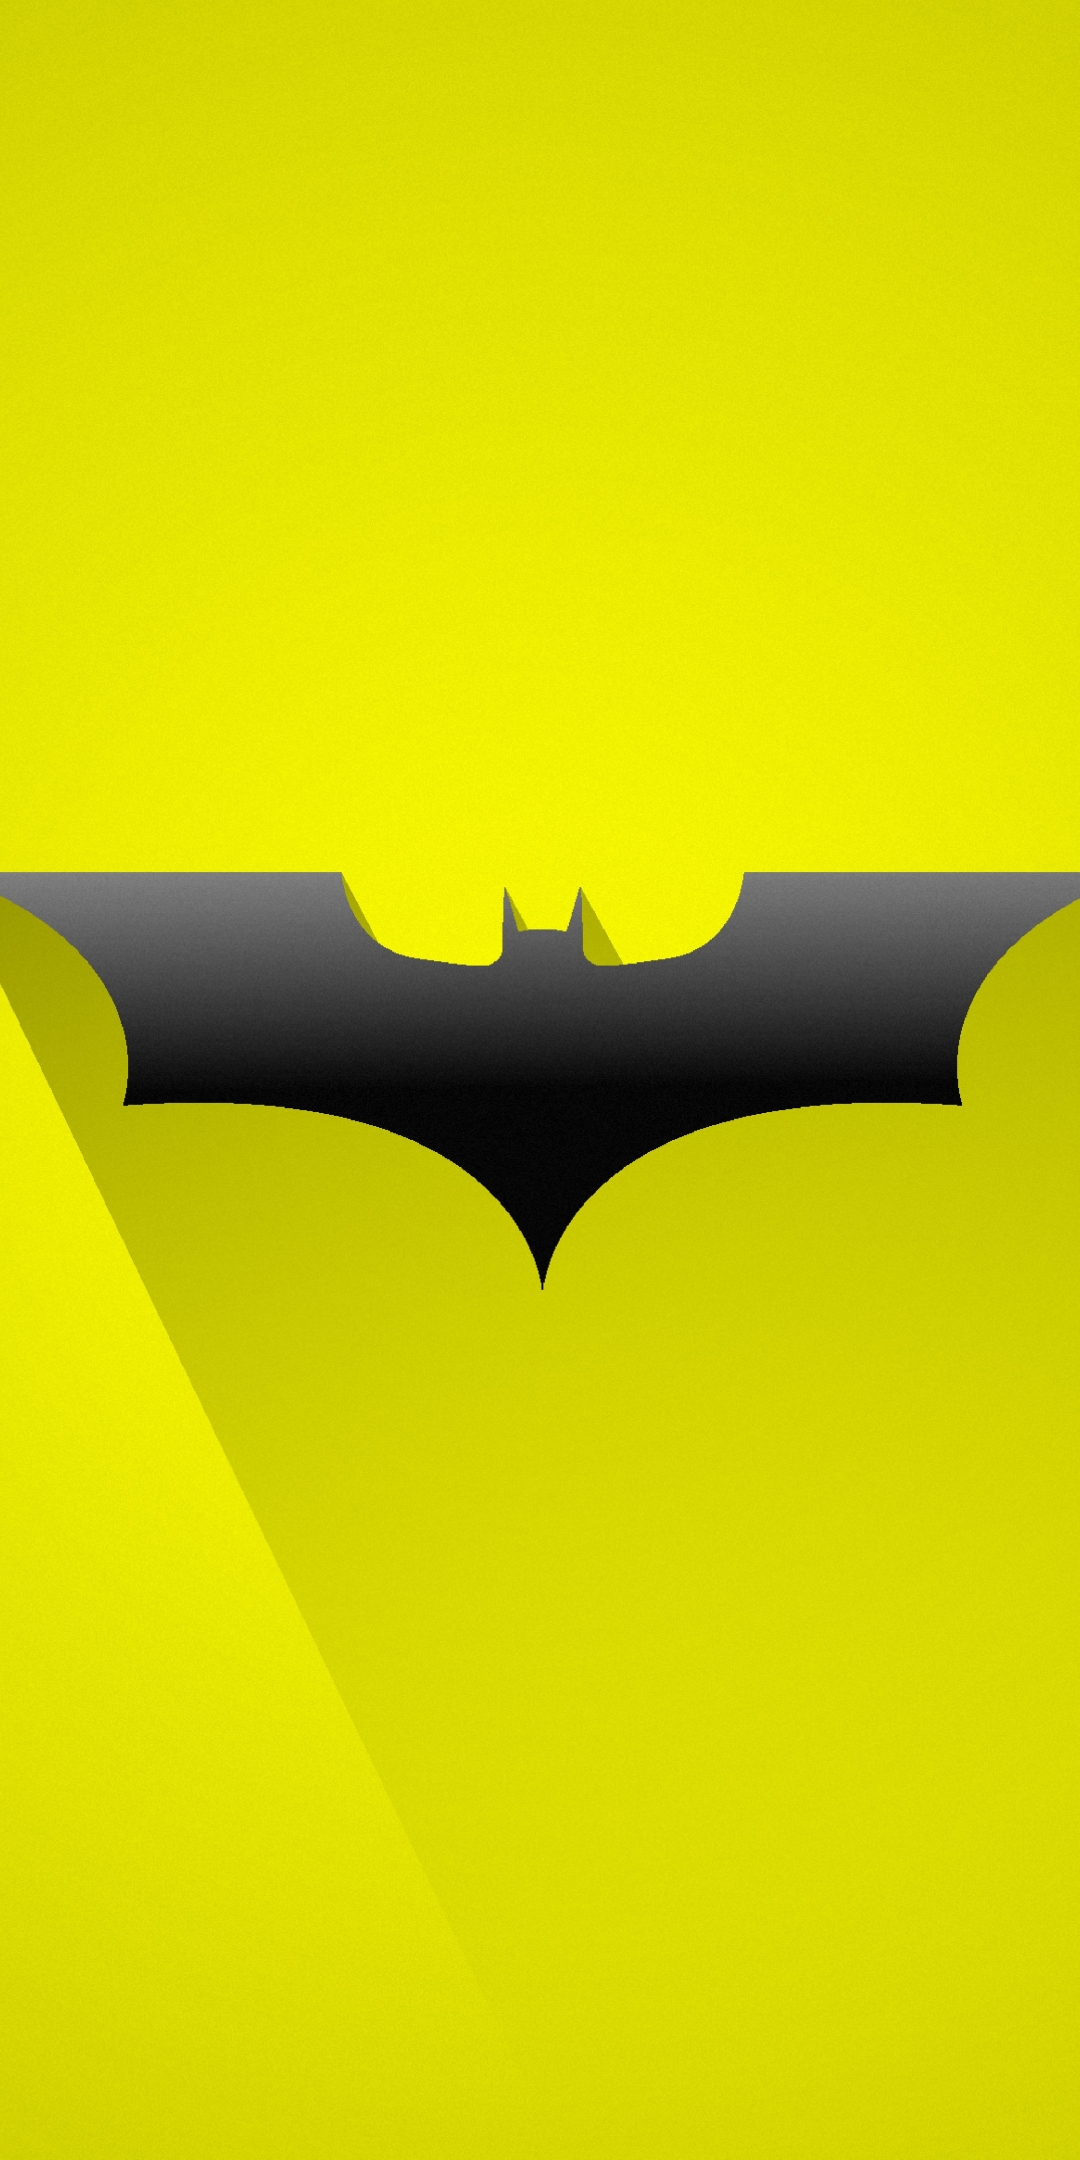 Скачать картинку Комиксы, Бэтмен, Логотип Бэтмена в телефон бесплатно.